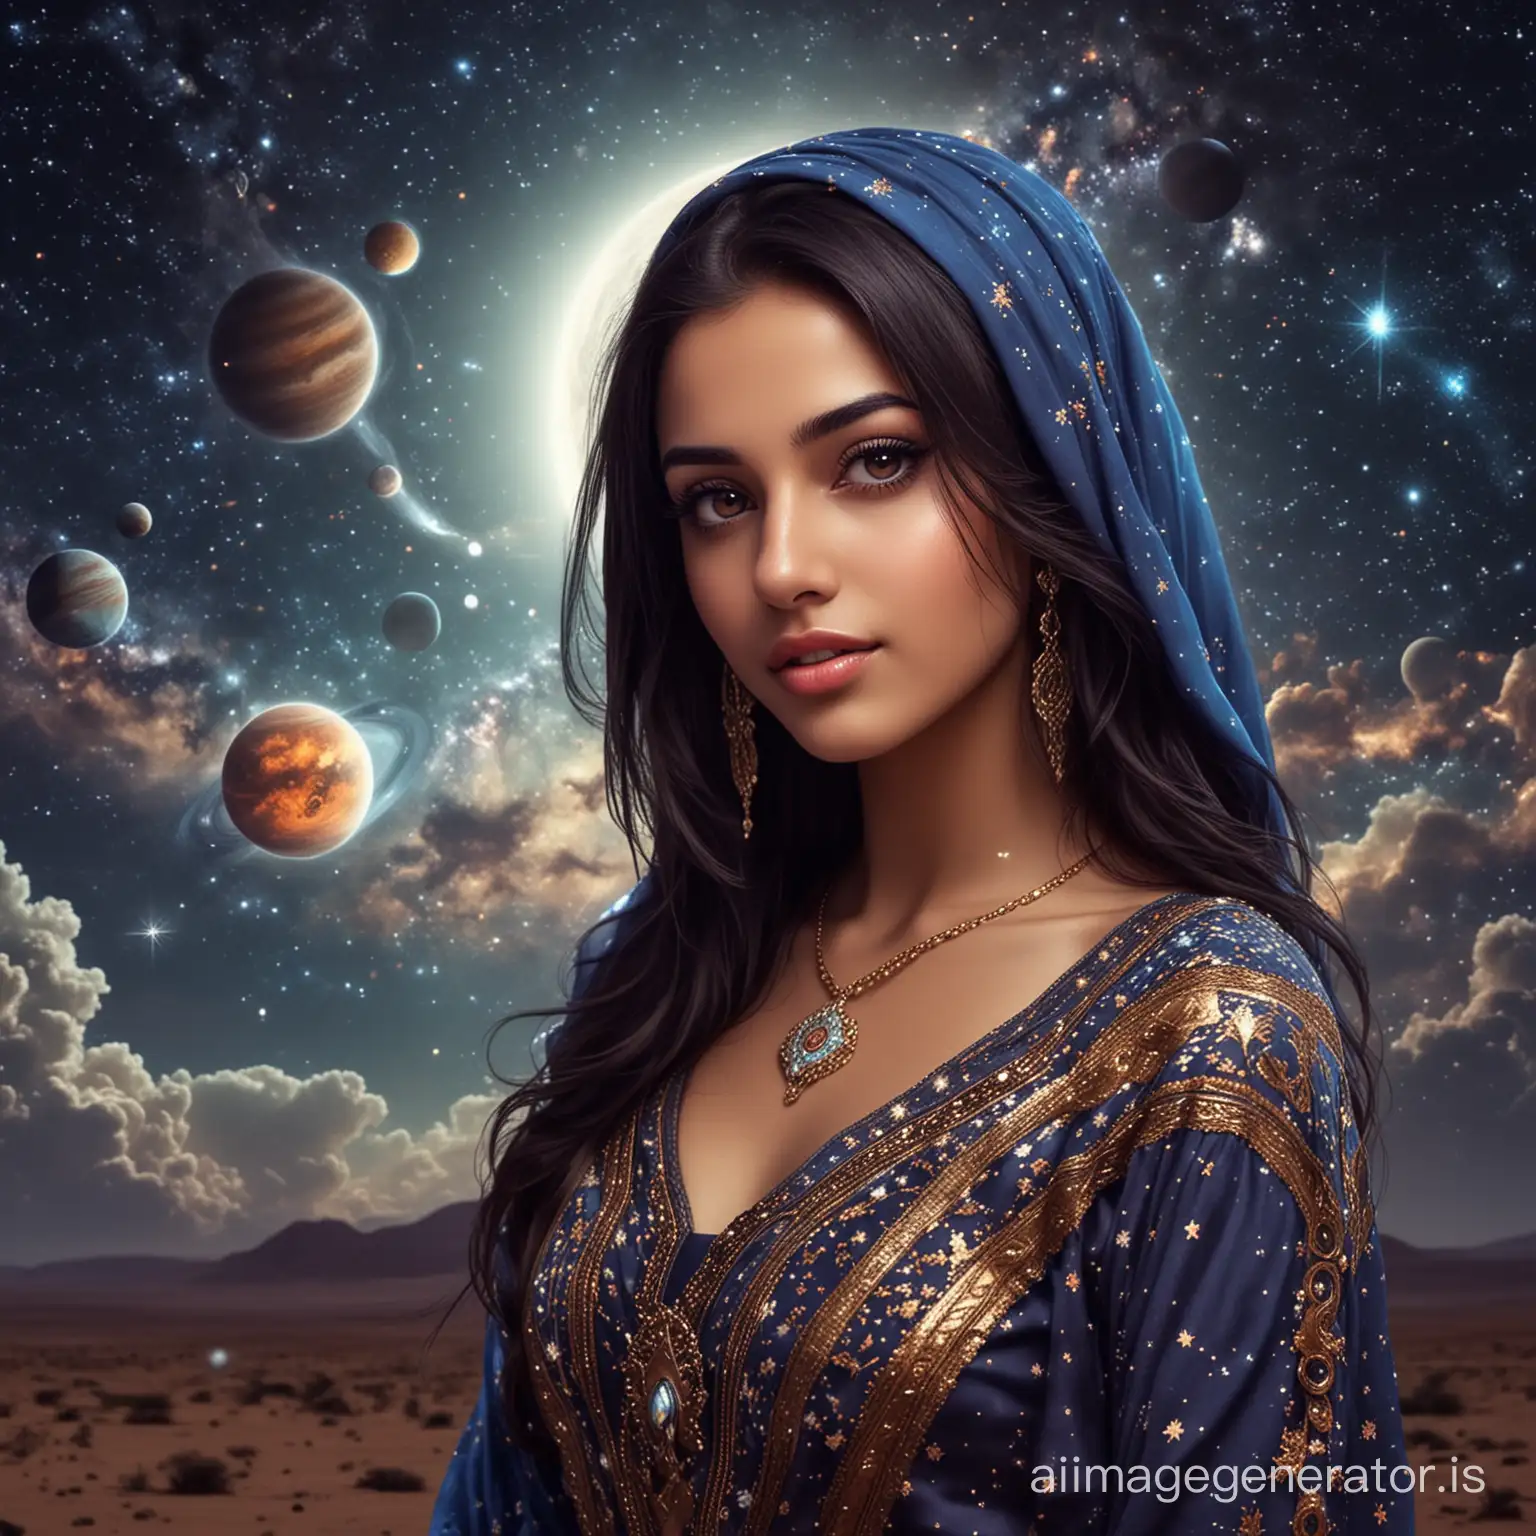  beautiful arab girl, magical beauty, Astrological universe, planets, night sky,